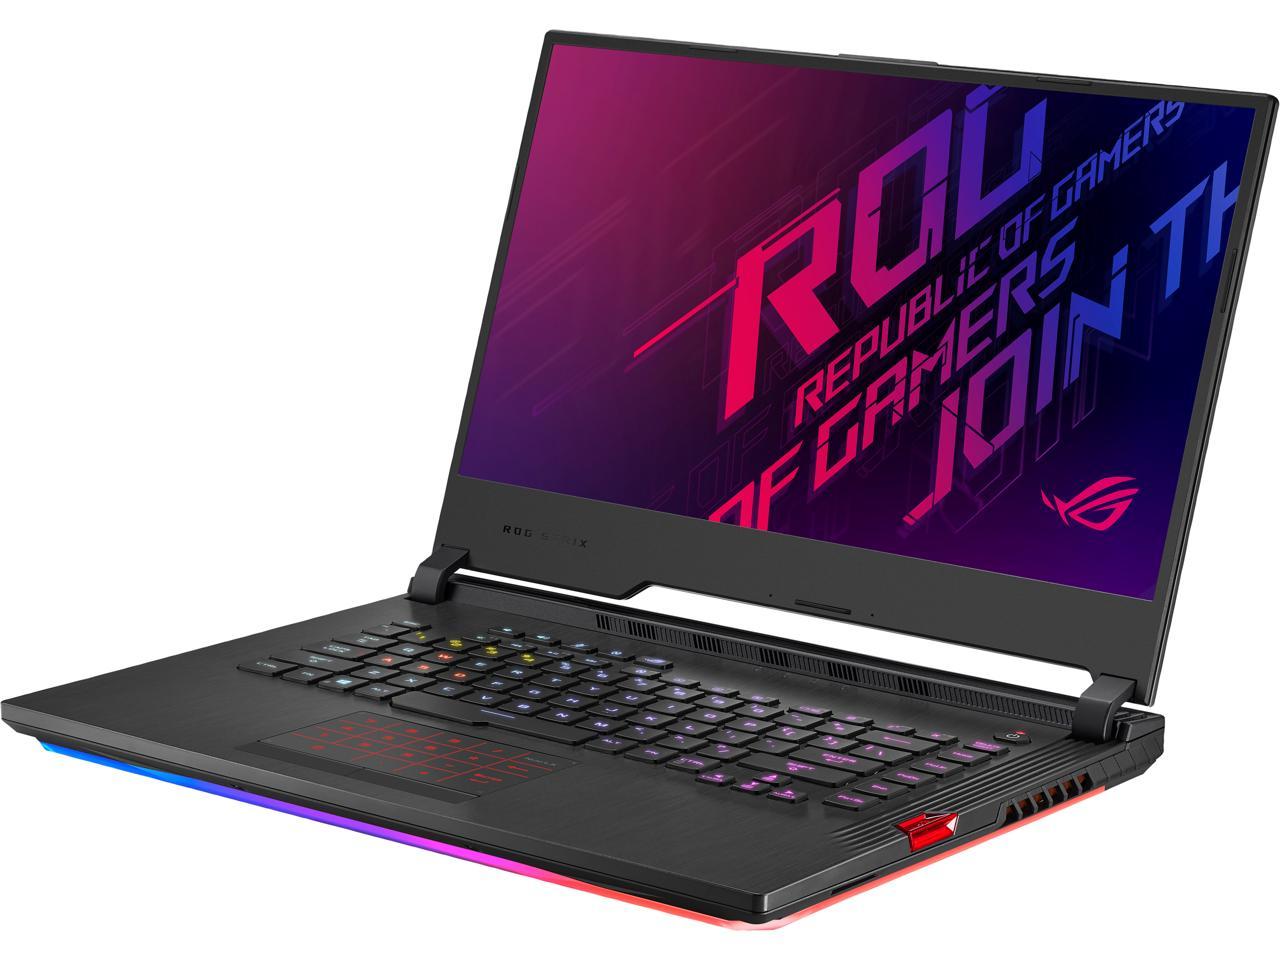 ASUS ROG Strix Hero III - 15.6" 144 Hz - GeForce RTX 2070 - Intel Core i7-9750H - 16 GB DDR4 - 512 GB SSD - Per-Key RGB KB - Windows 10 Pro - Gaming Laptop (G531GW-XB74)